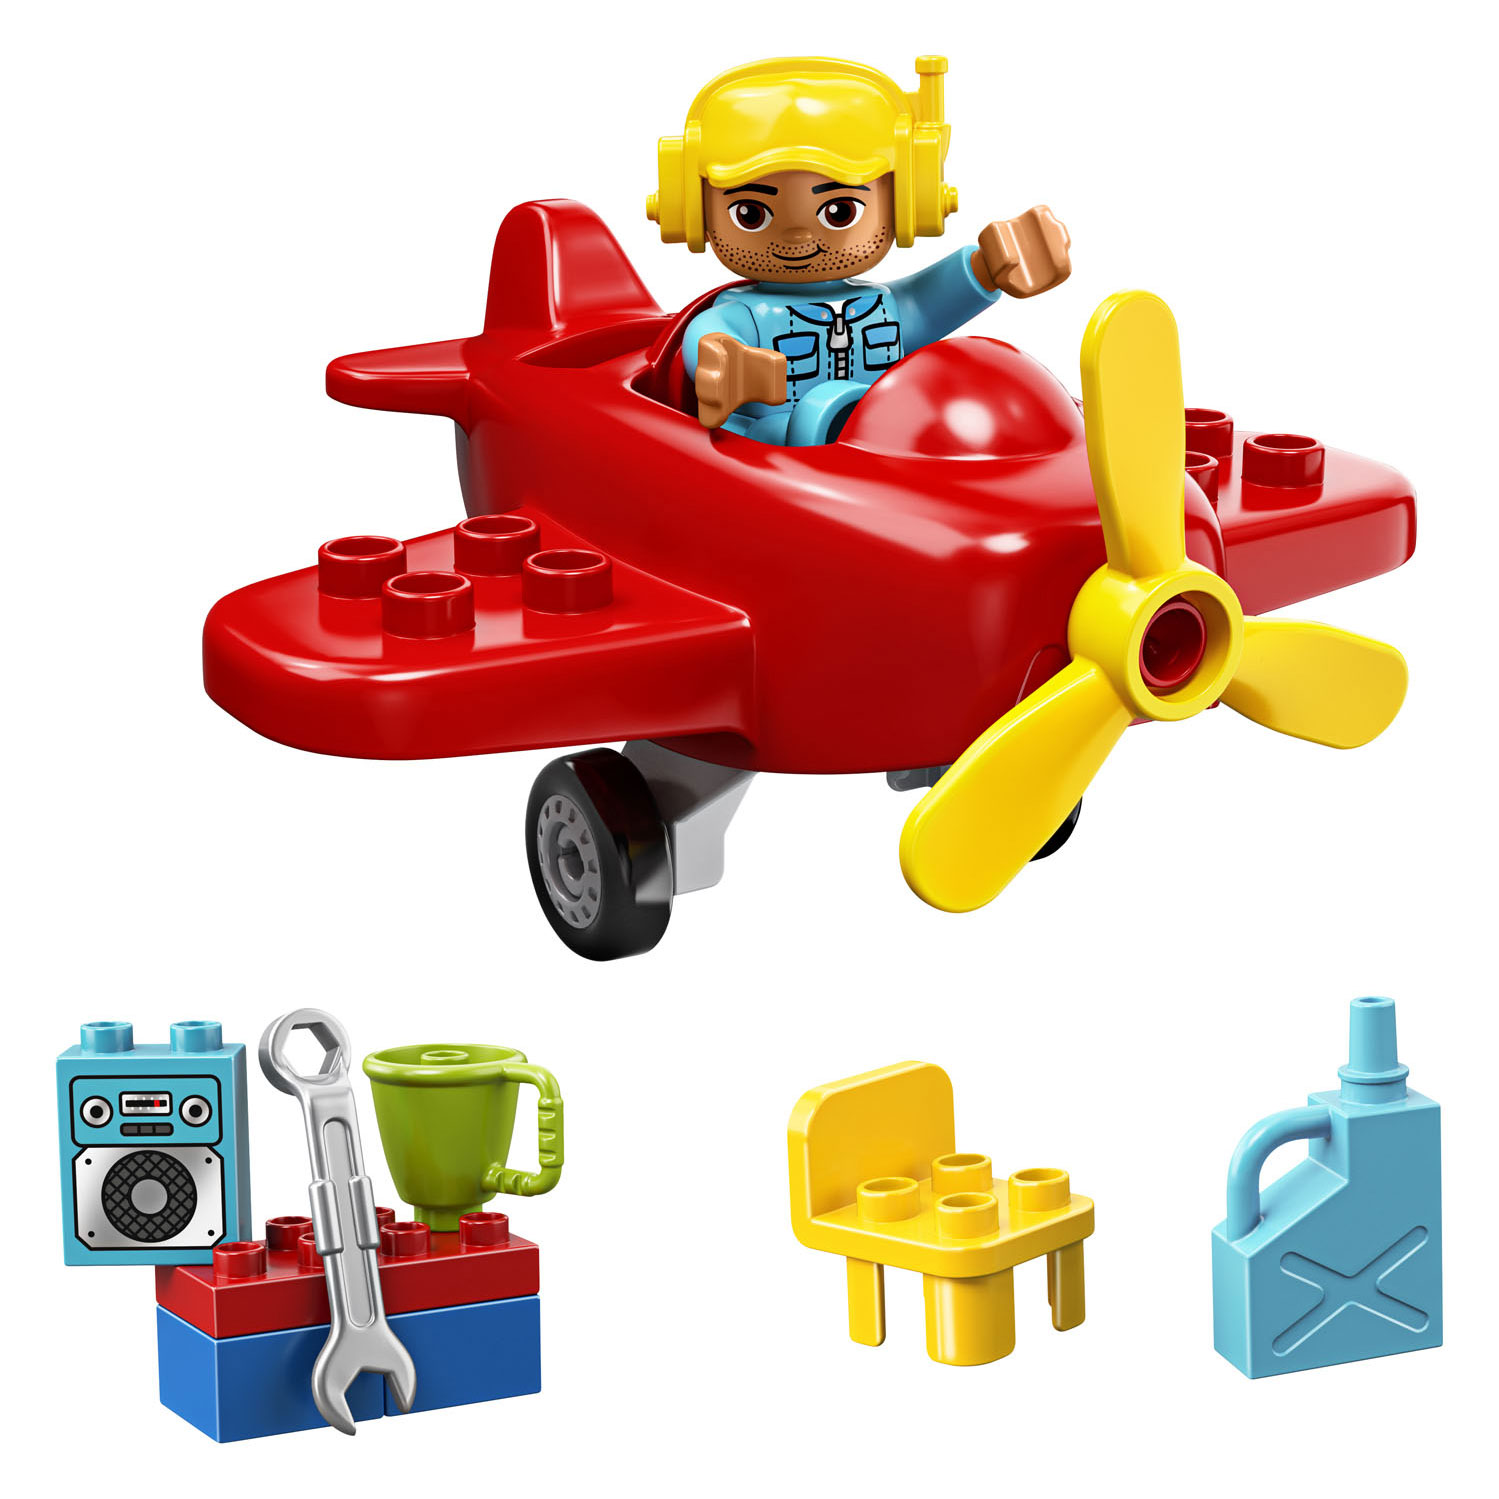 LEGO DUPLO 10908 Vliegtuig